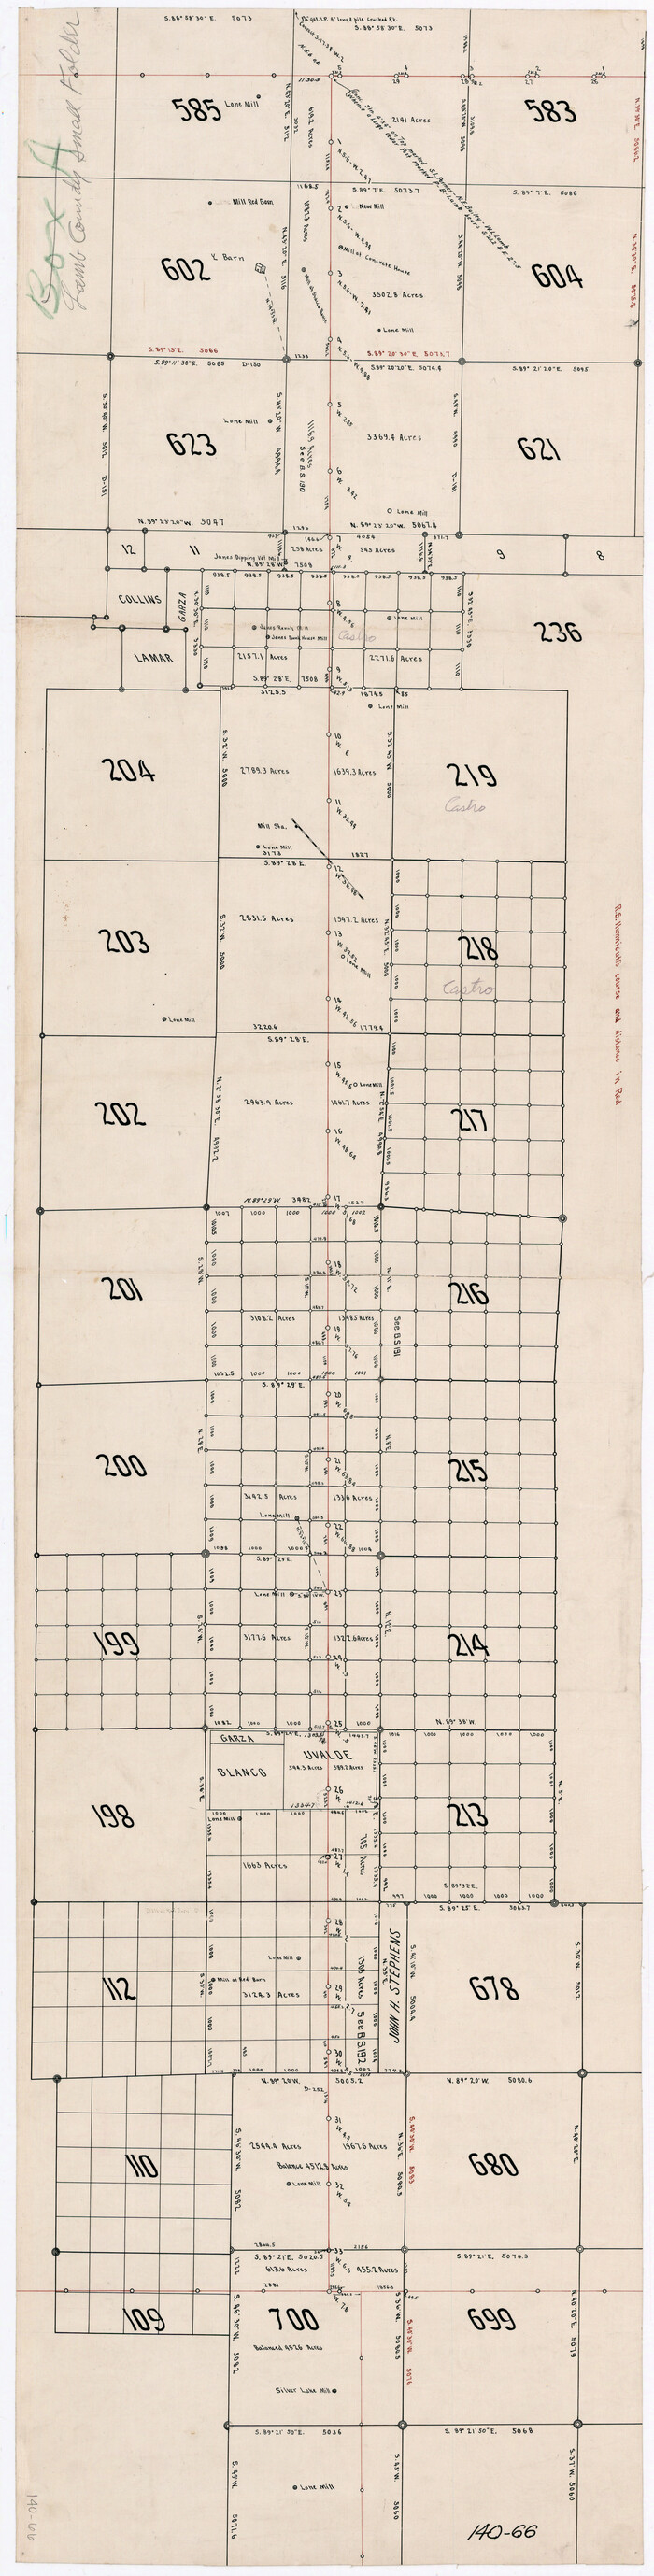 89630, [Capitol Leagues along Bailey-Lamb County Line], Twichell Survey Records